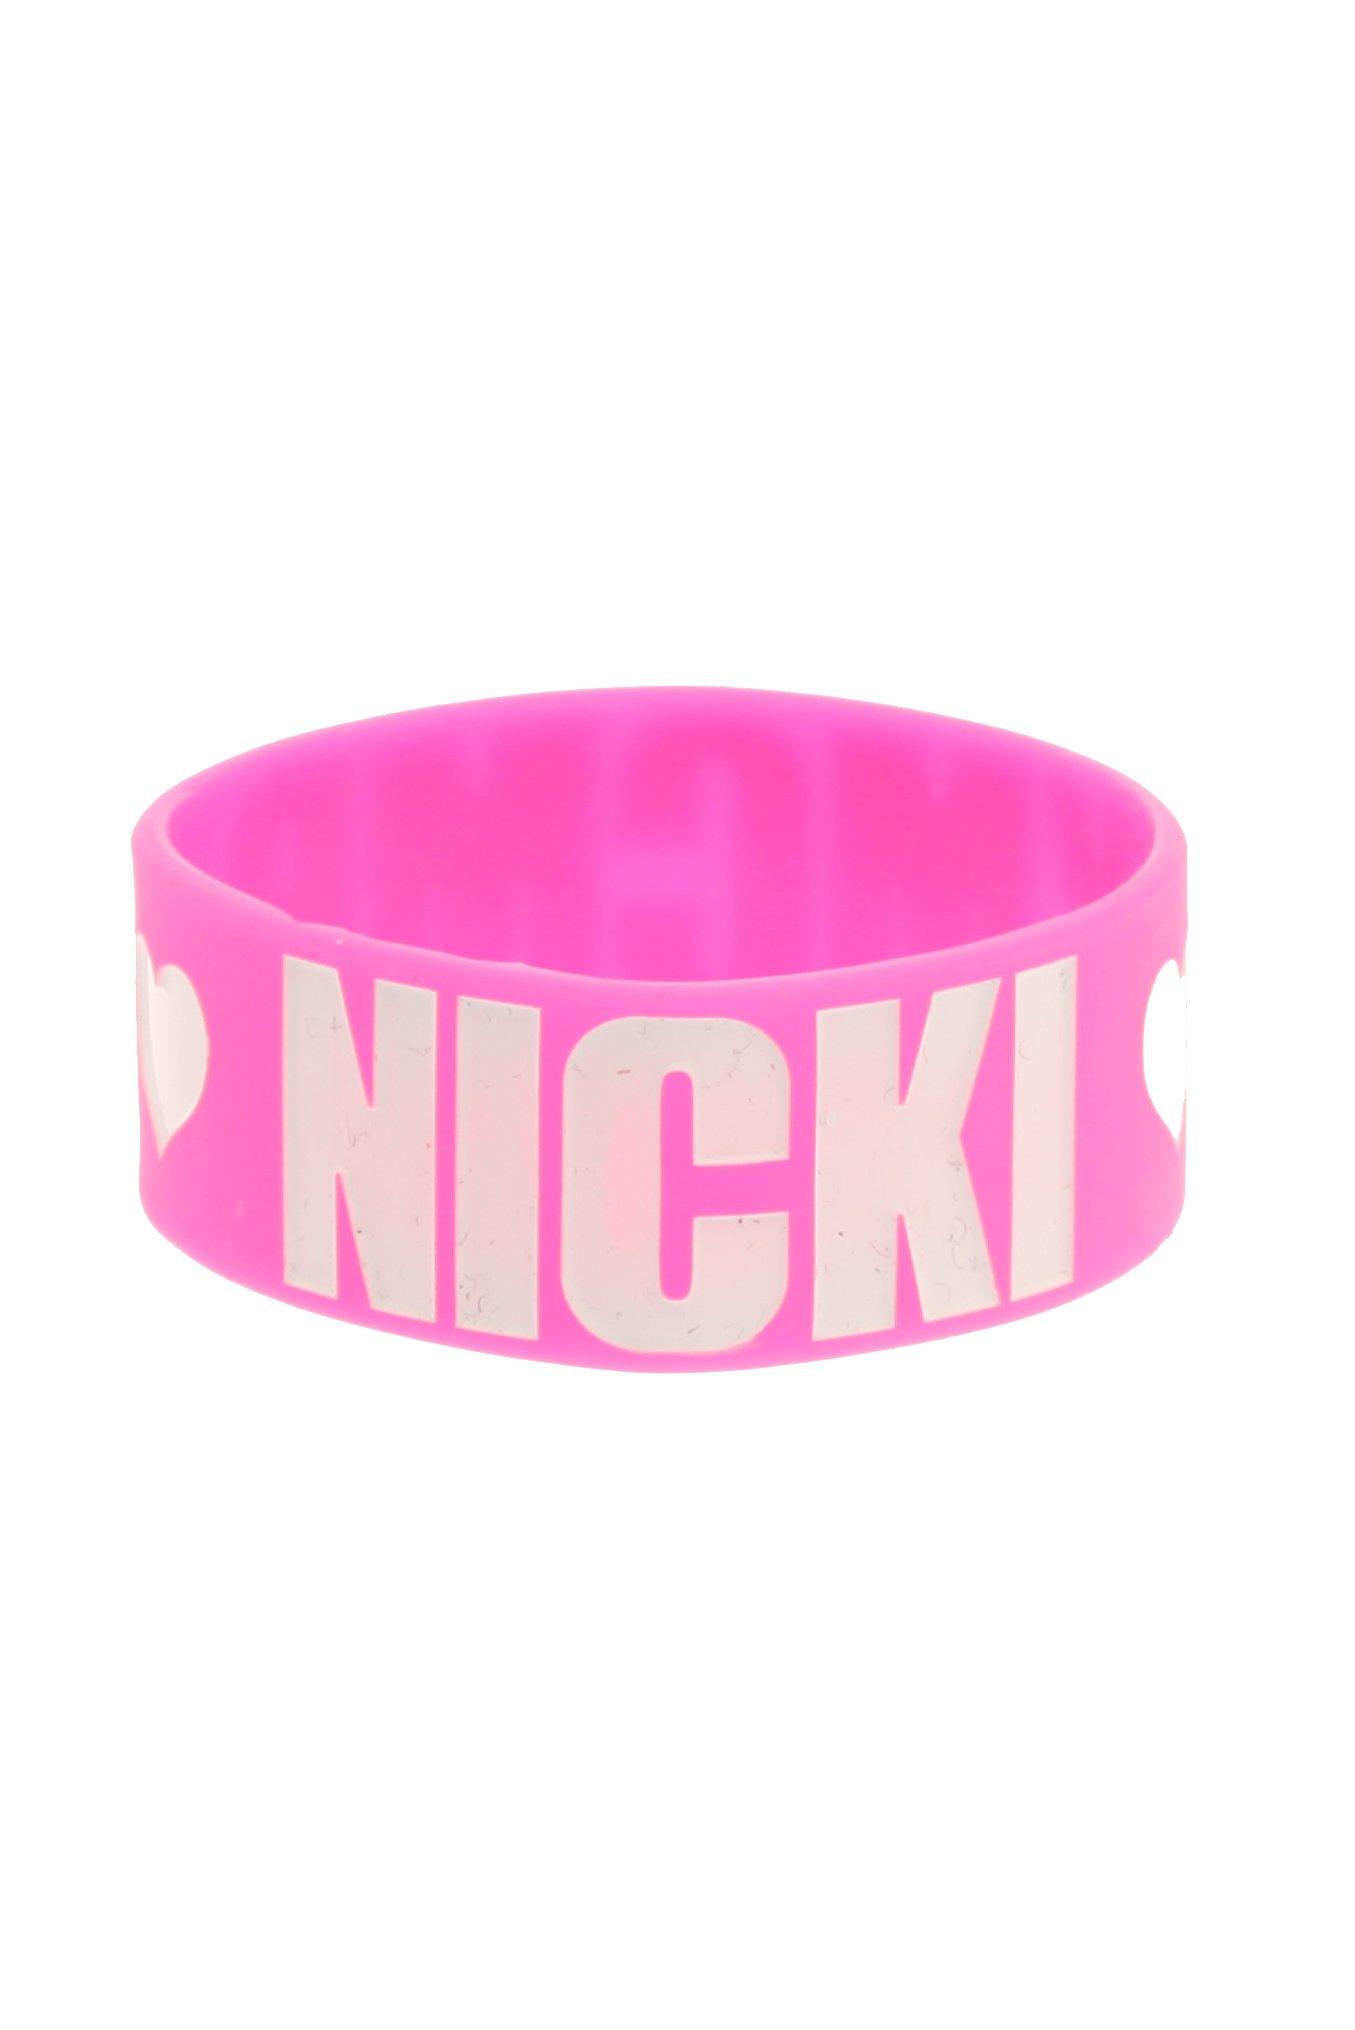 YMCMB Nicki Minaj Rubber Bracelet, , hi-res